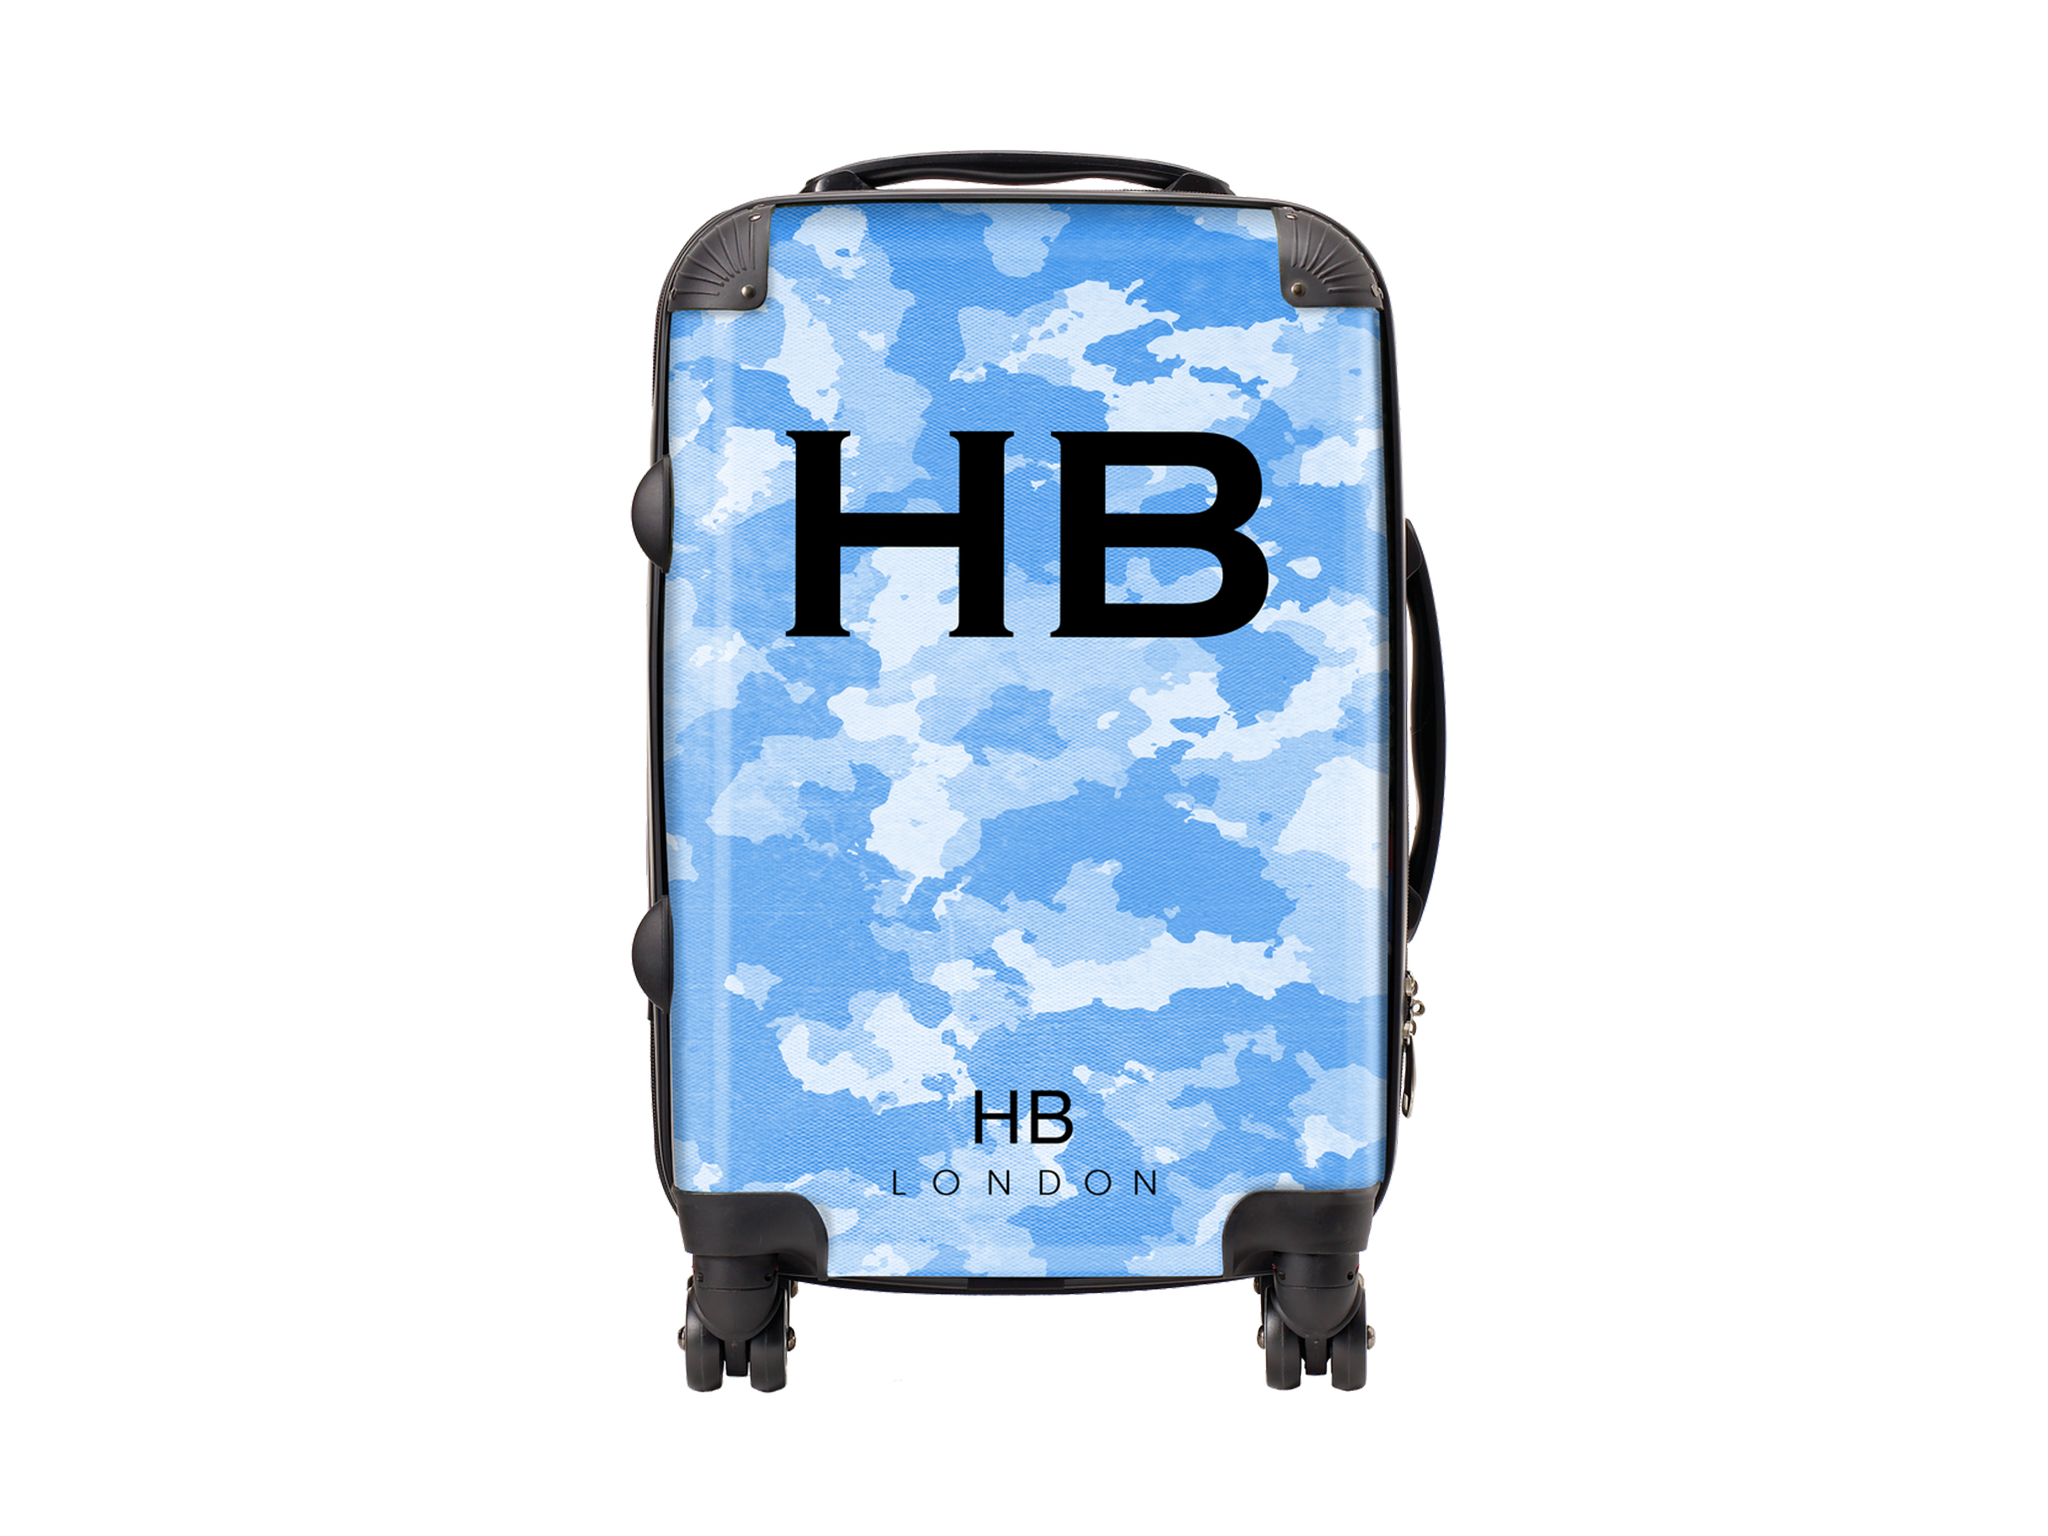 HB personalised suitcase